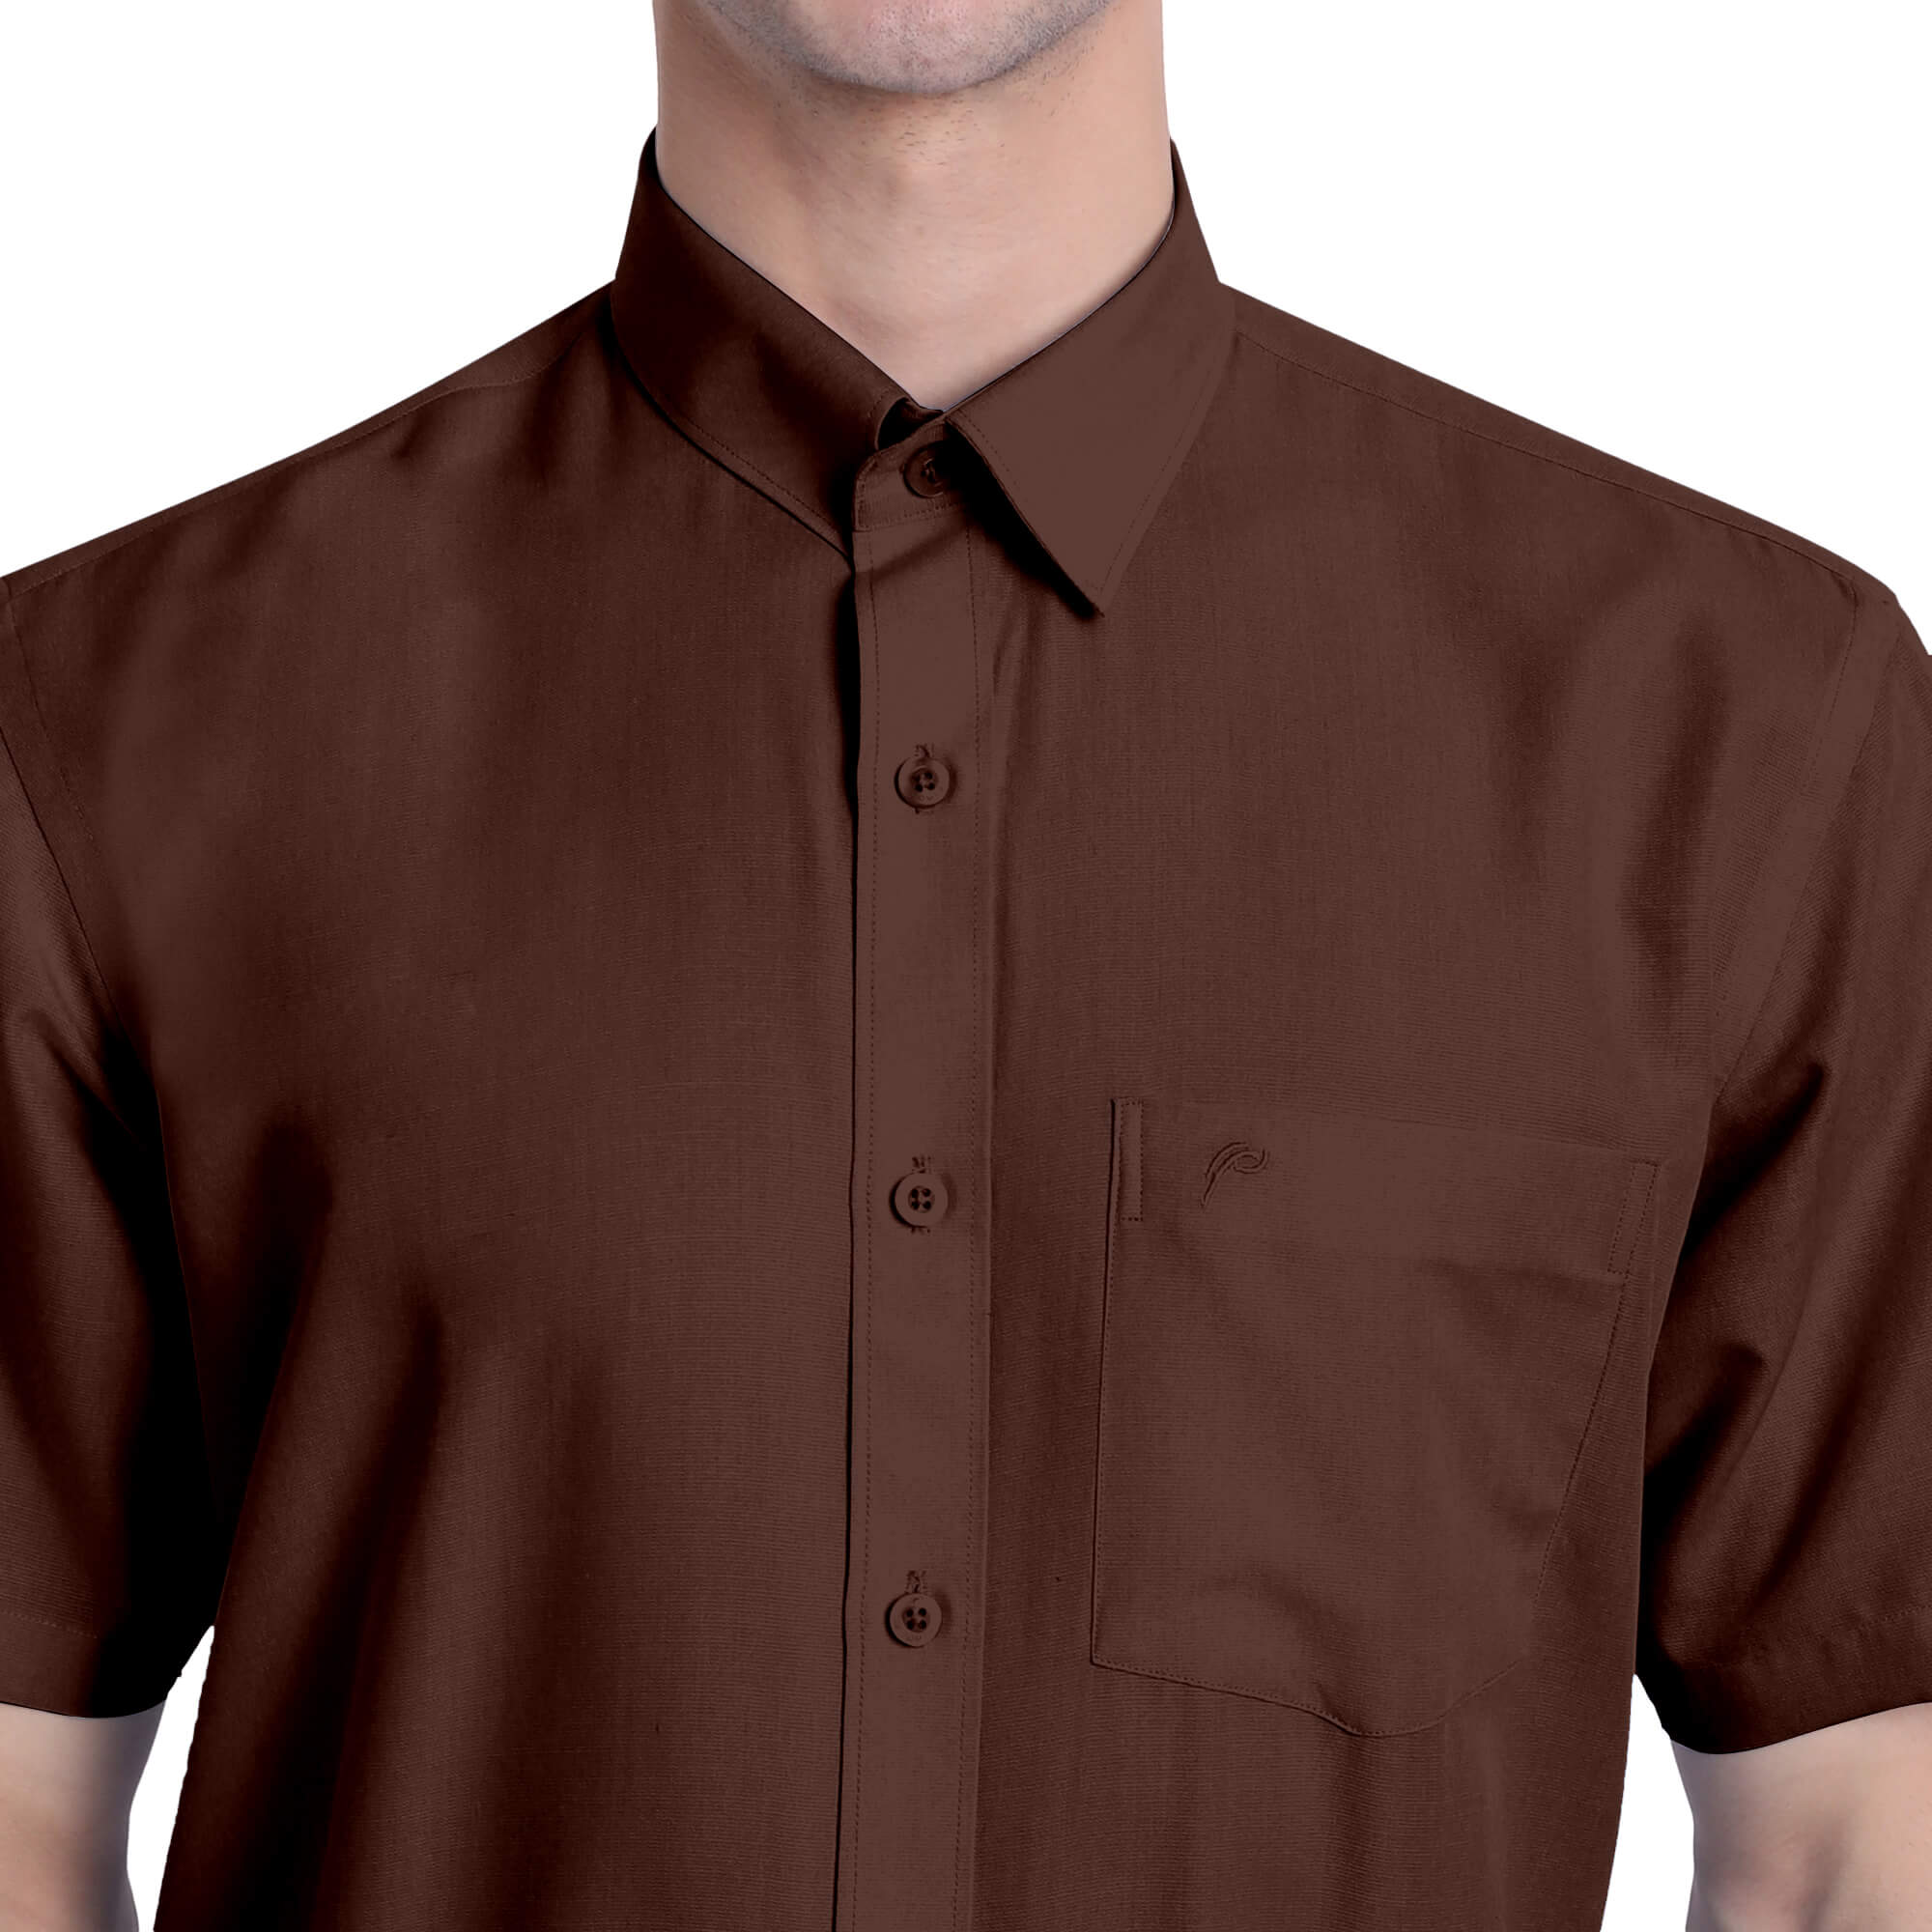 Poomer Elite Colour Shirt - Coffee Brown